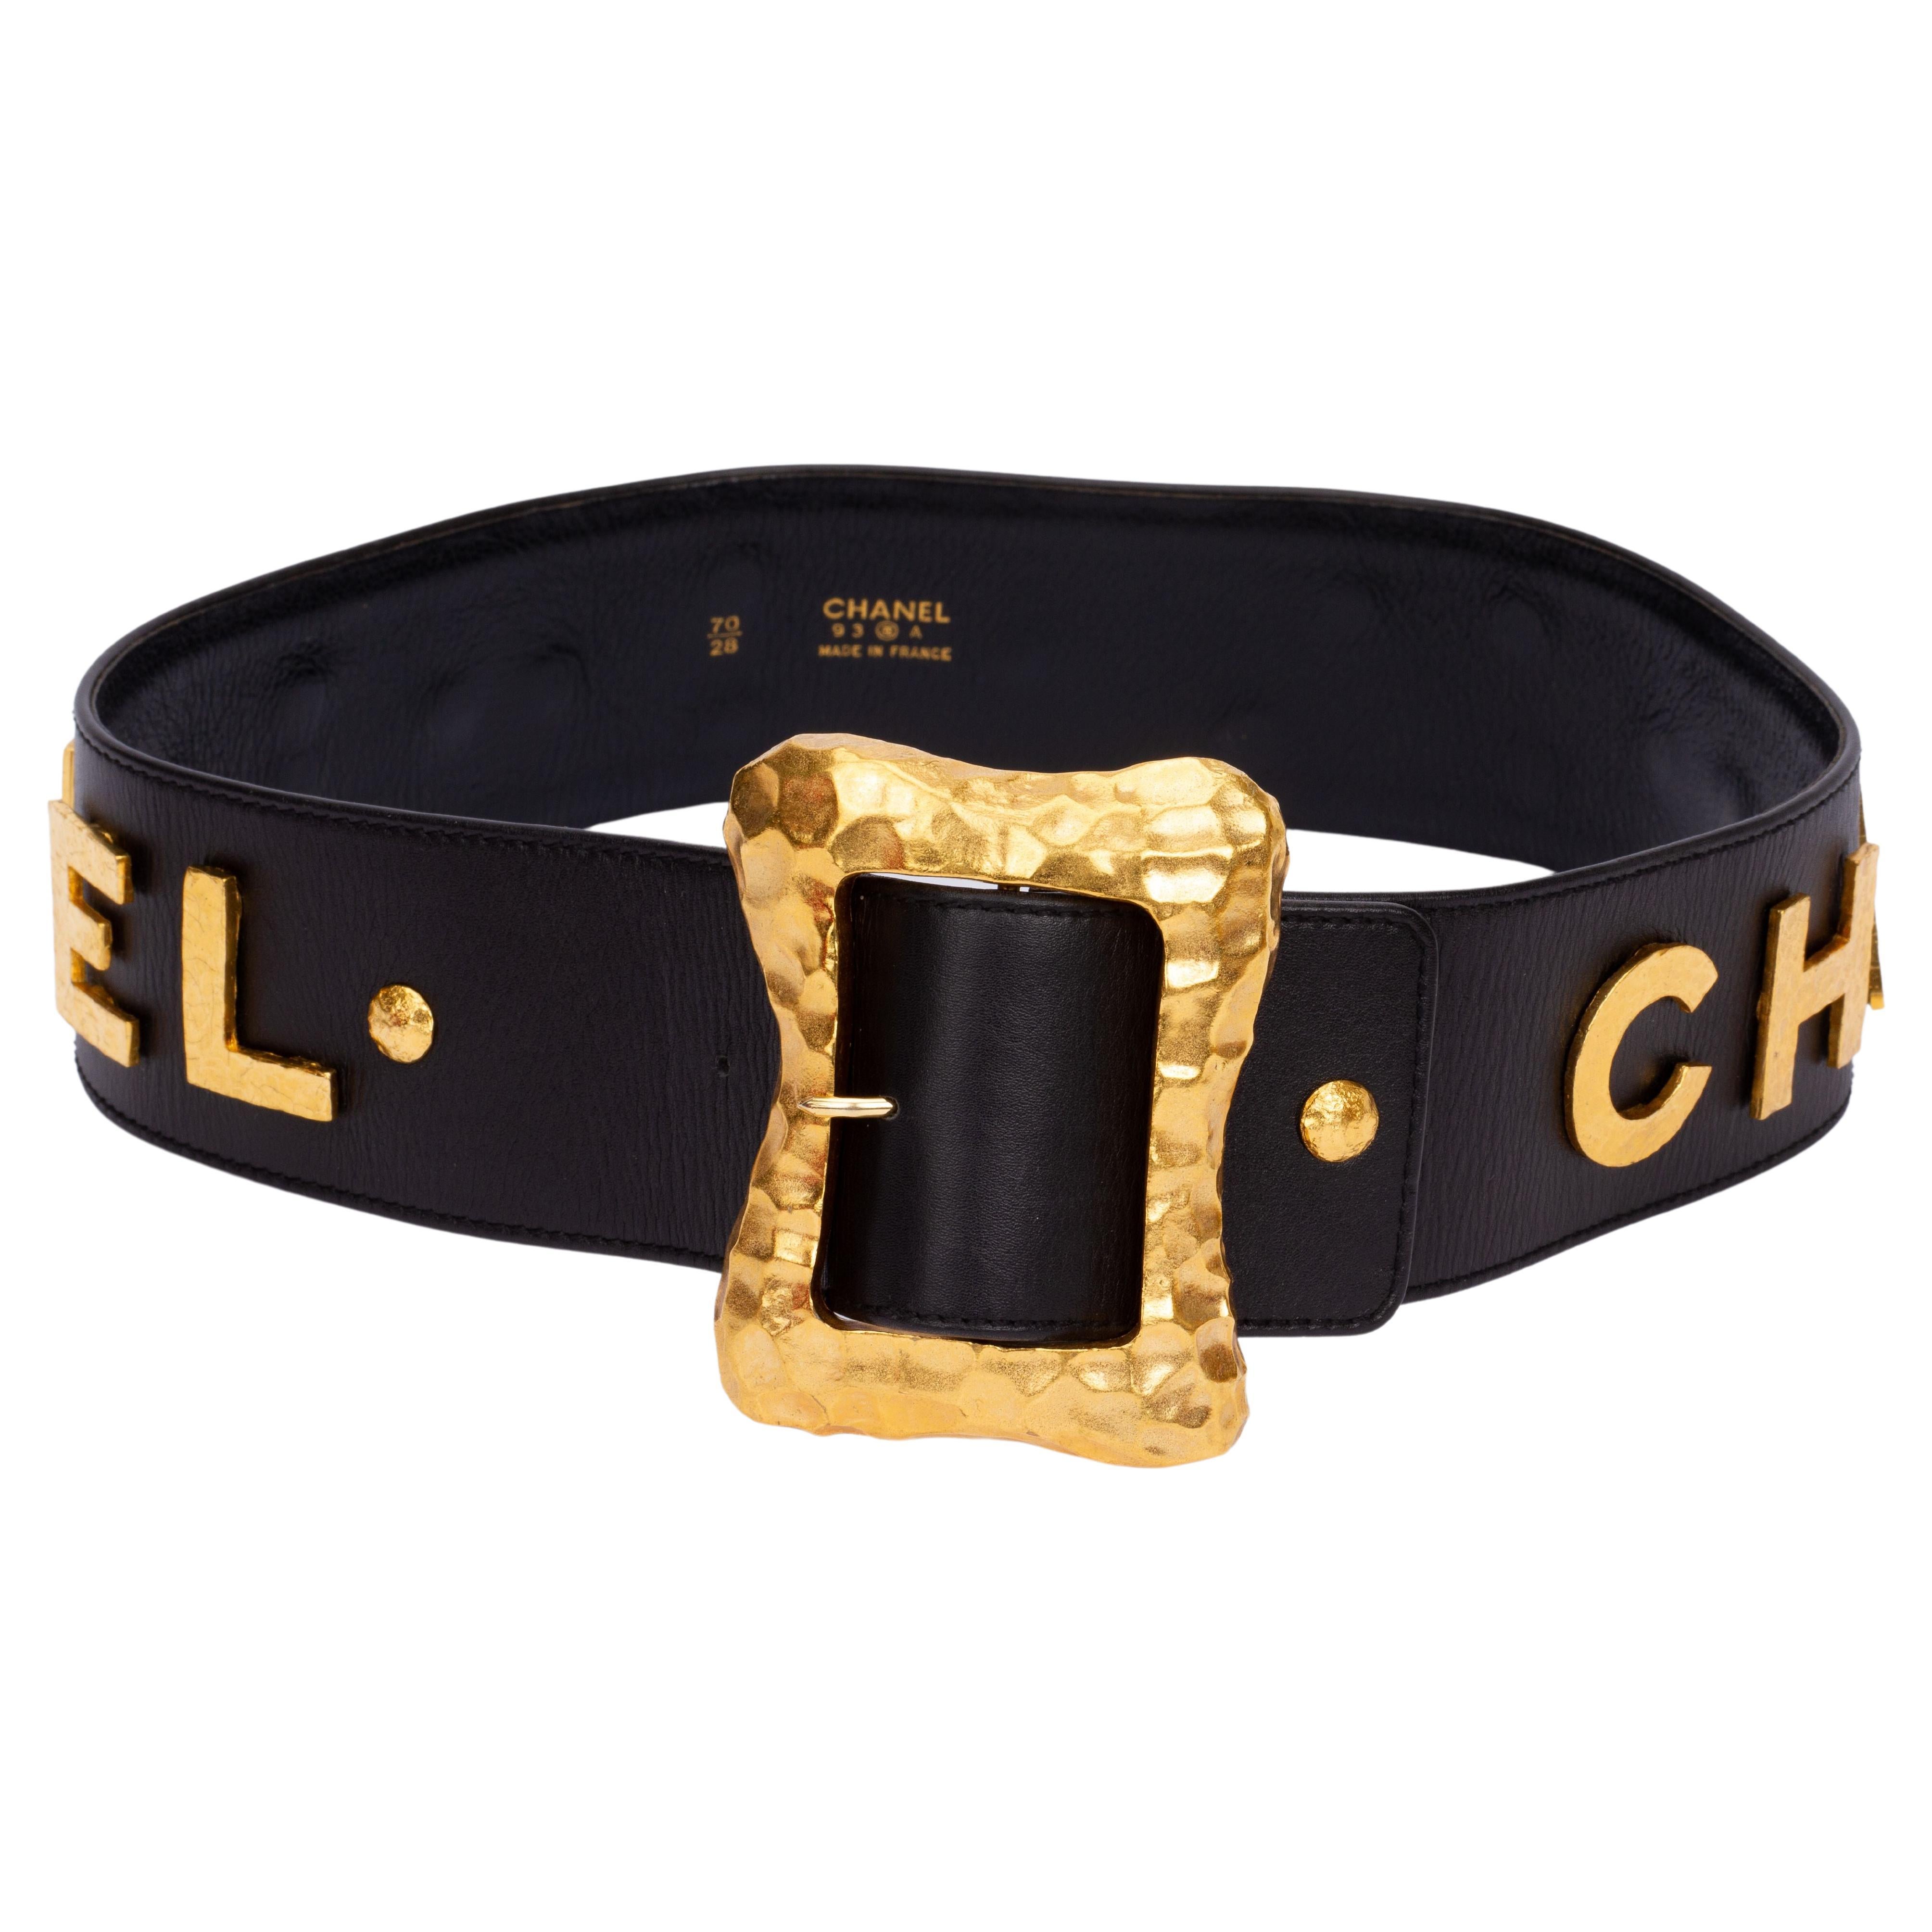 Chanel Rare Supermodel Black Gold Belt For Sale